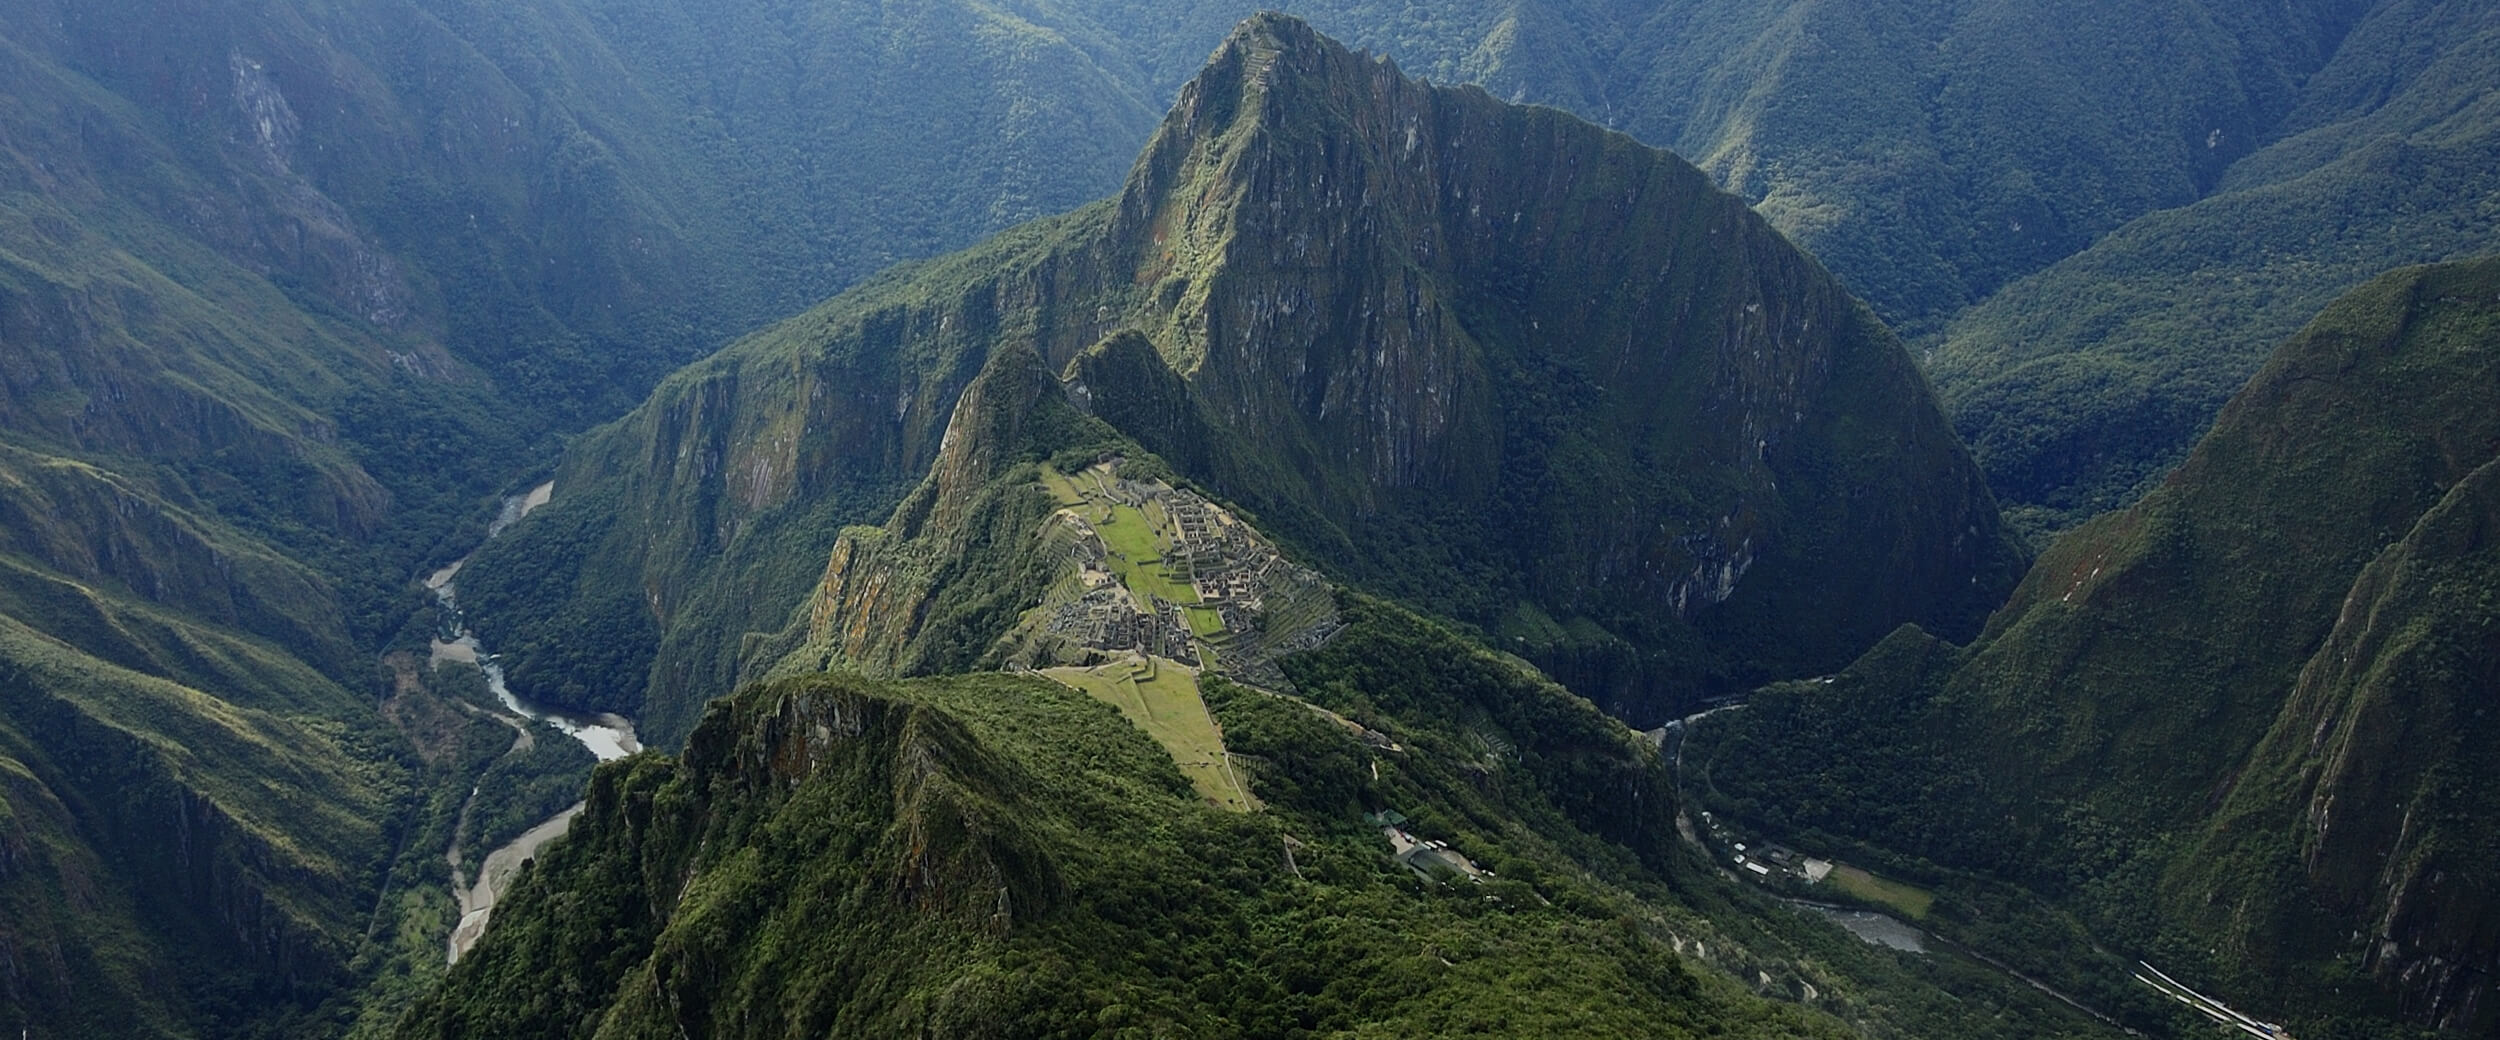 Machu Picchu 2 Days 1 NIght Over Night